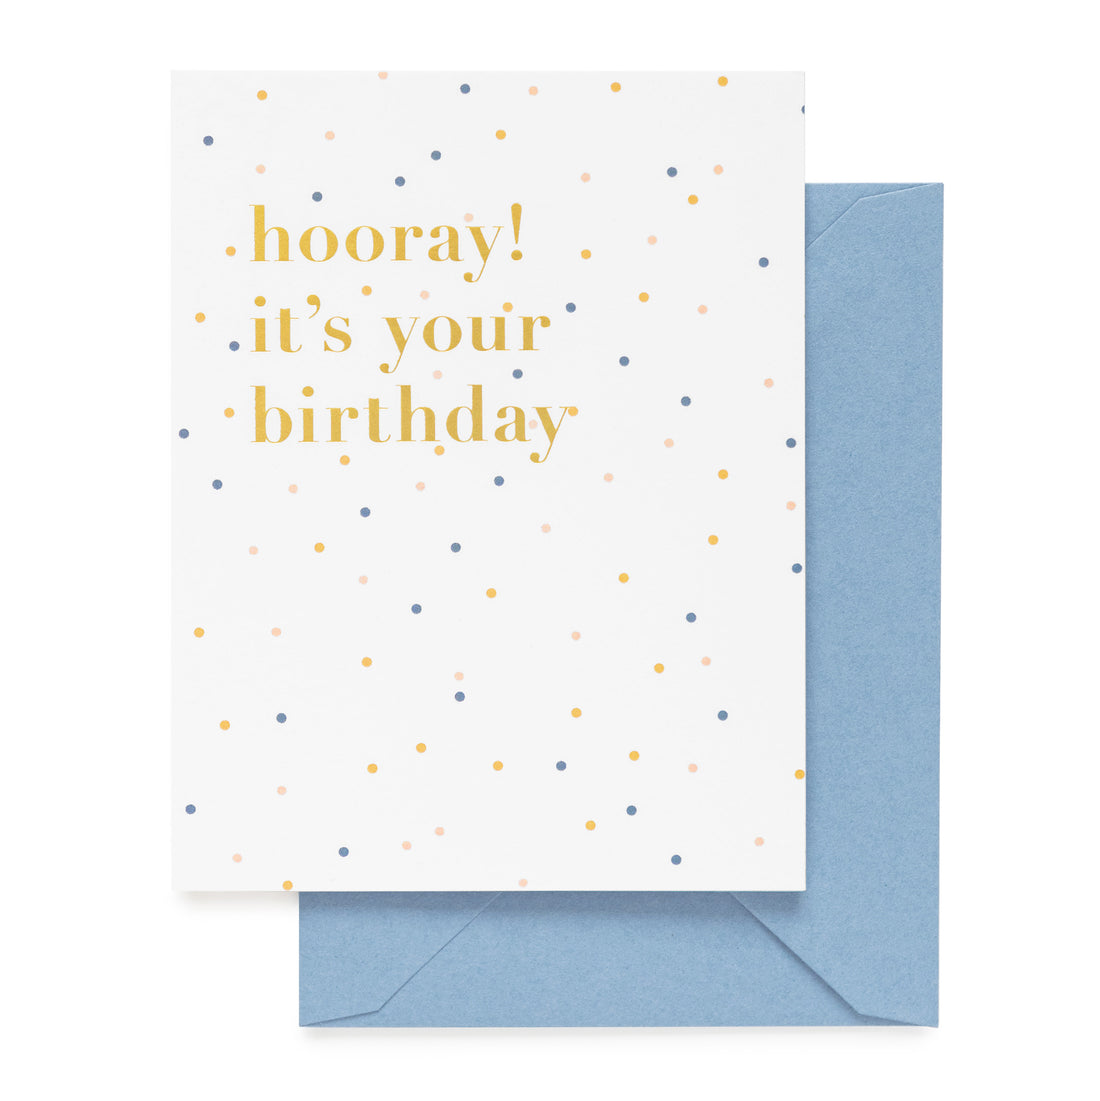 hooray! it's your birthday card